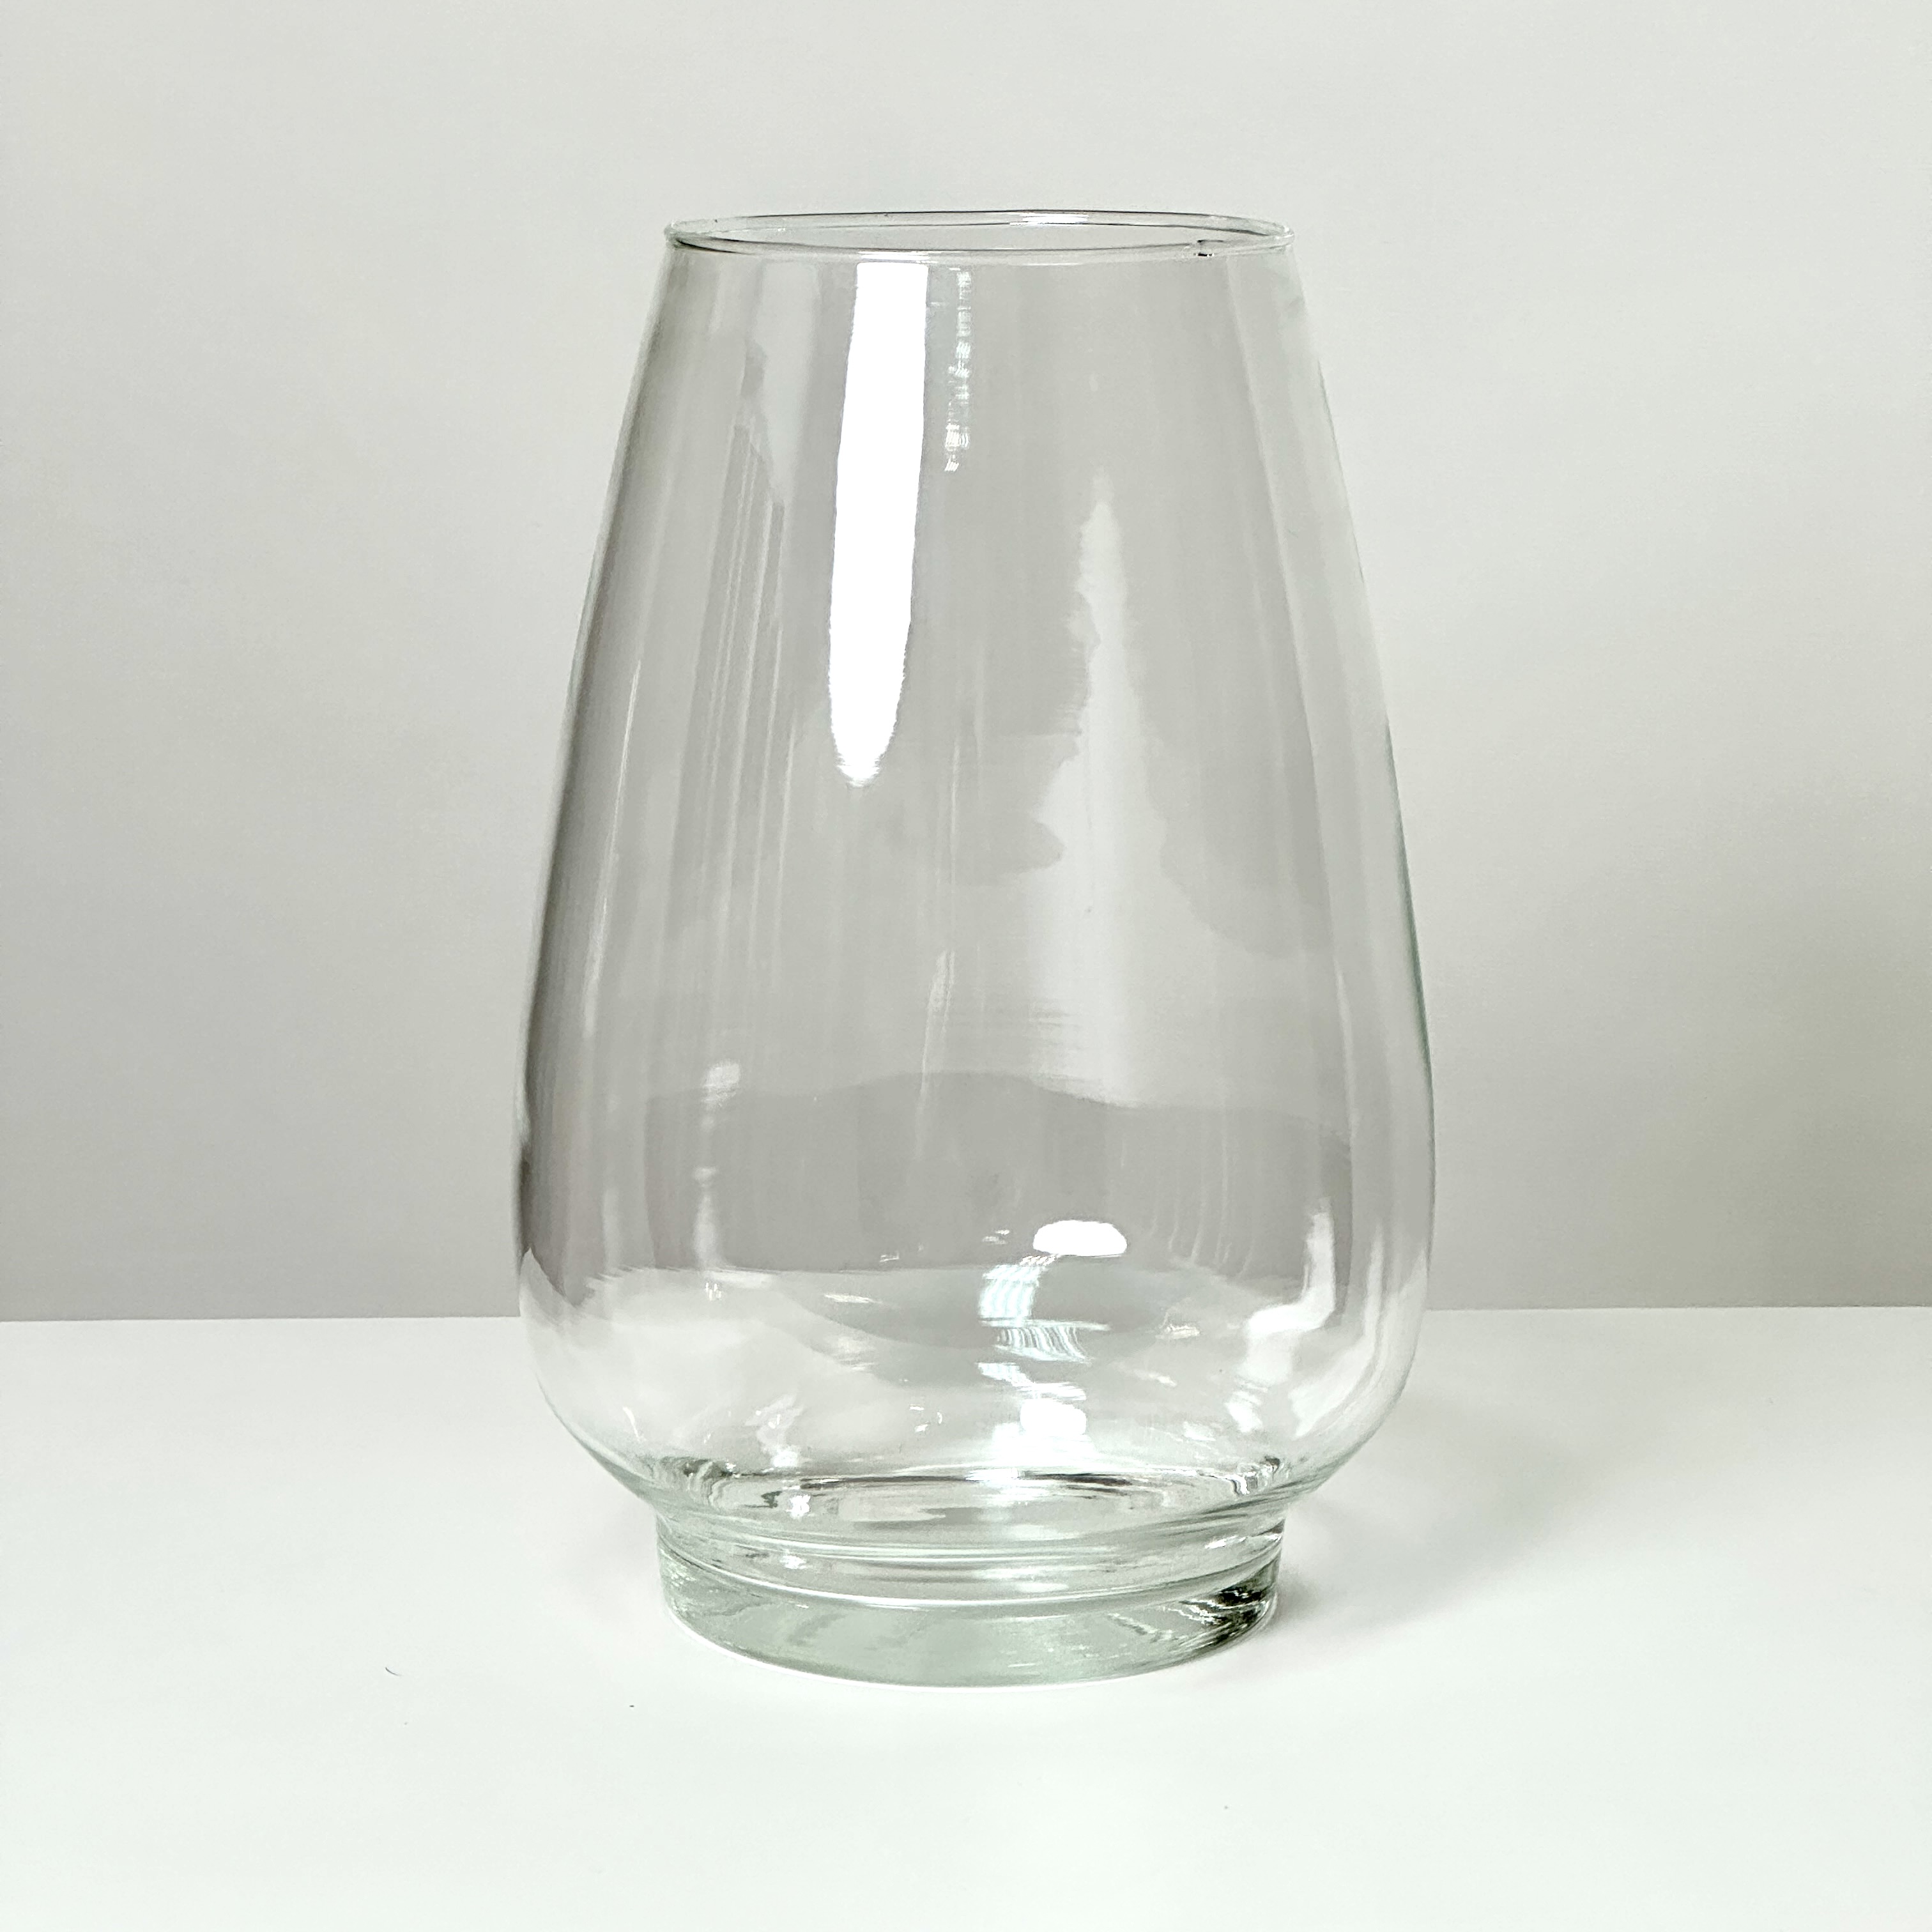 Ваза Вурм ваза вурм d 11 5см 25х15 v 3 7л толщина стекла 5 5мм 1881 прозрачная